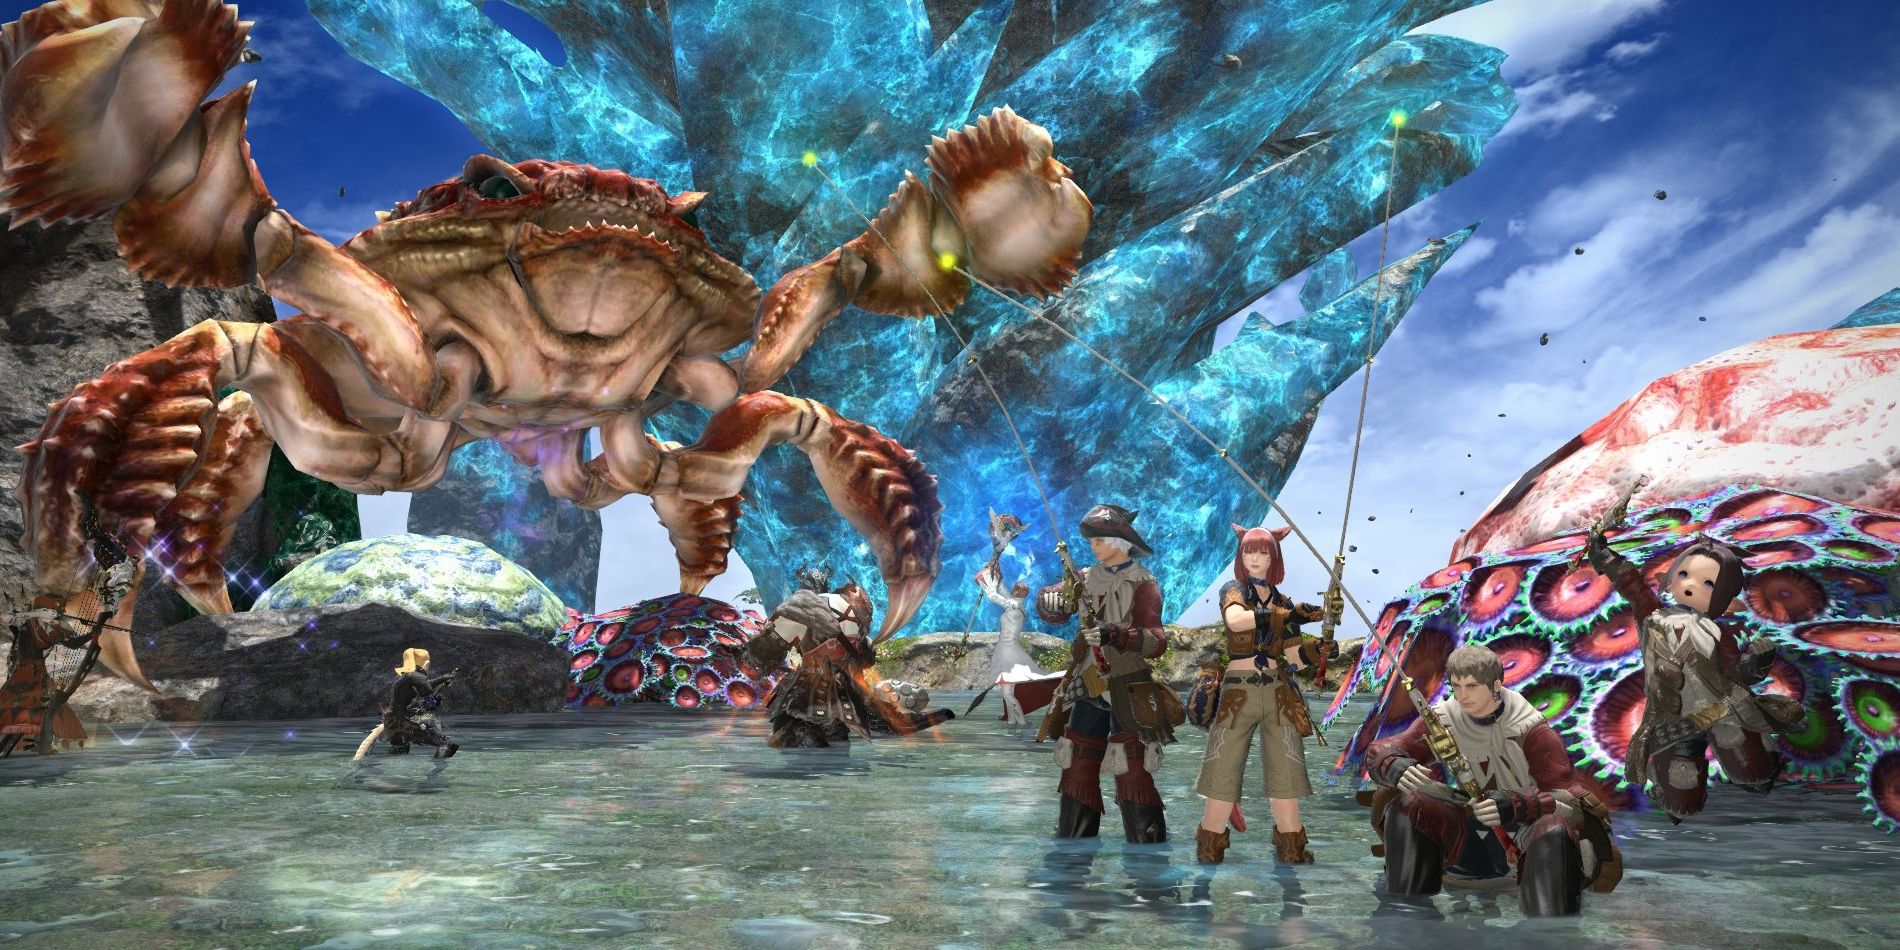 Fishing in the Diadem in Final Fantasy 14